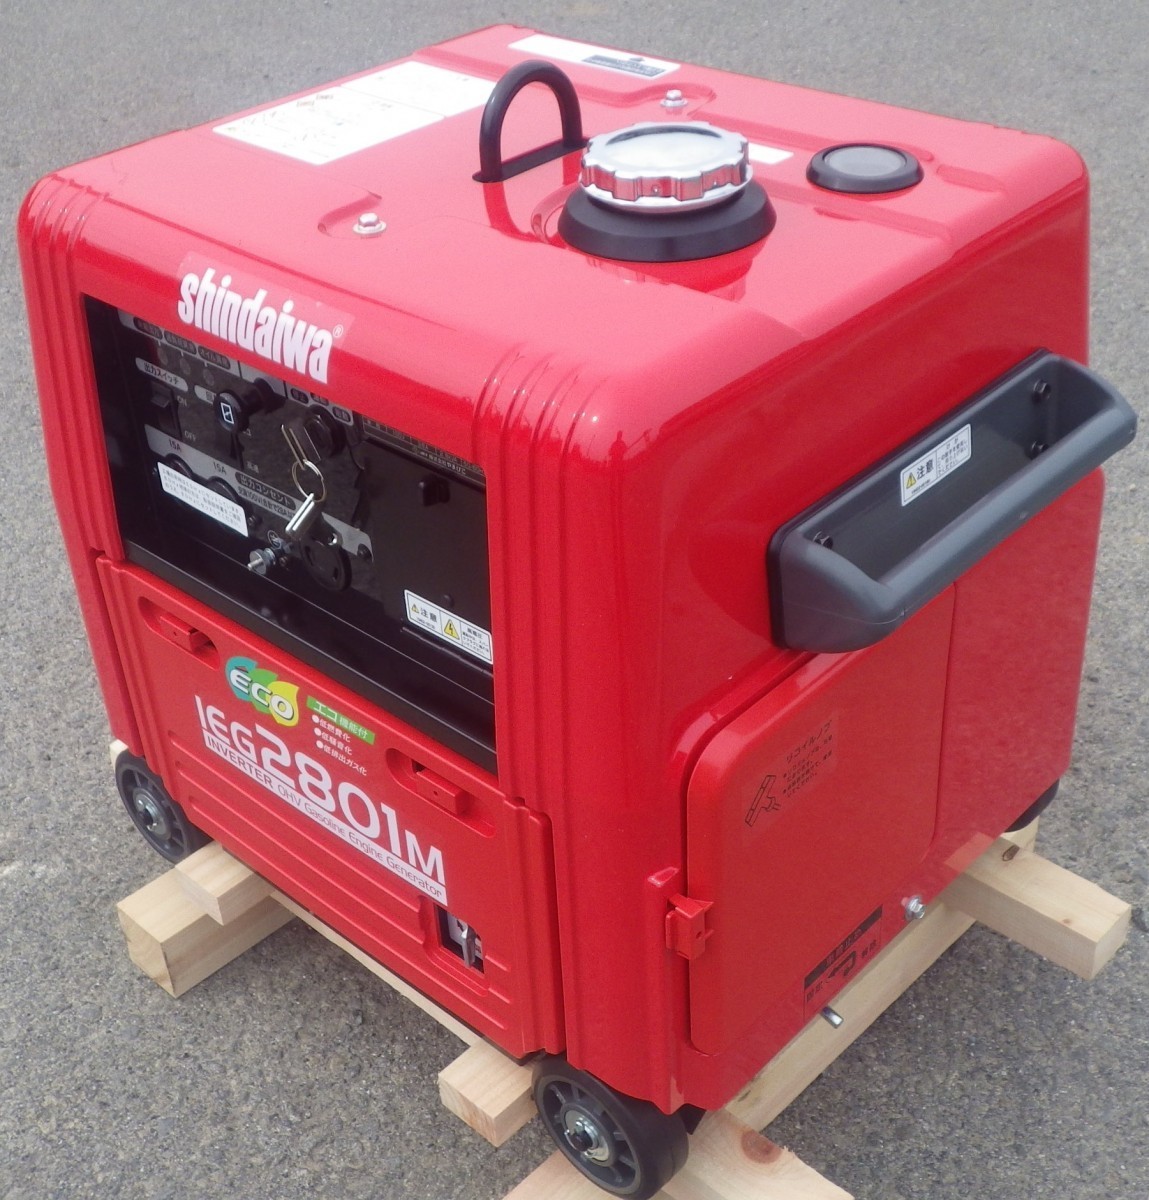  generator Shindaiwa IEG2801M 2.8kVA inverter gasoline soundproofing type 